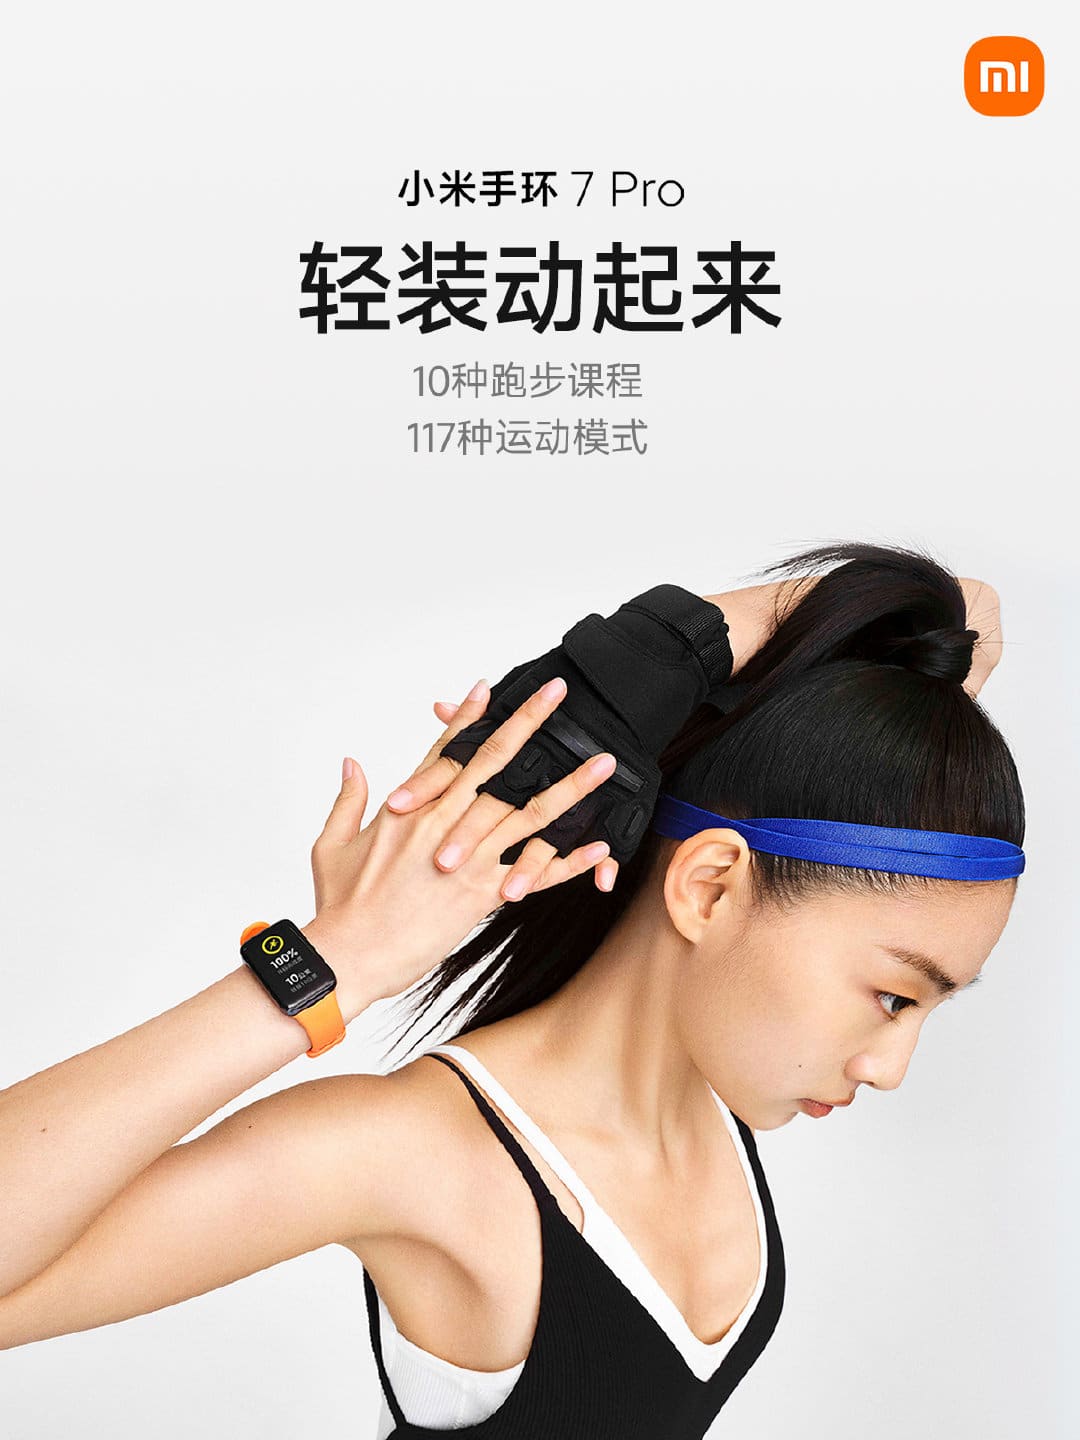 Xiaomi Mi Band 7 Pro sports